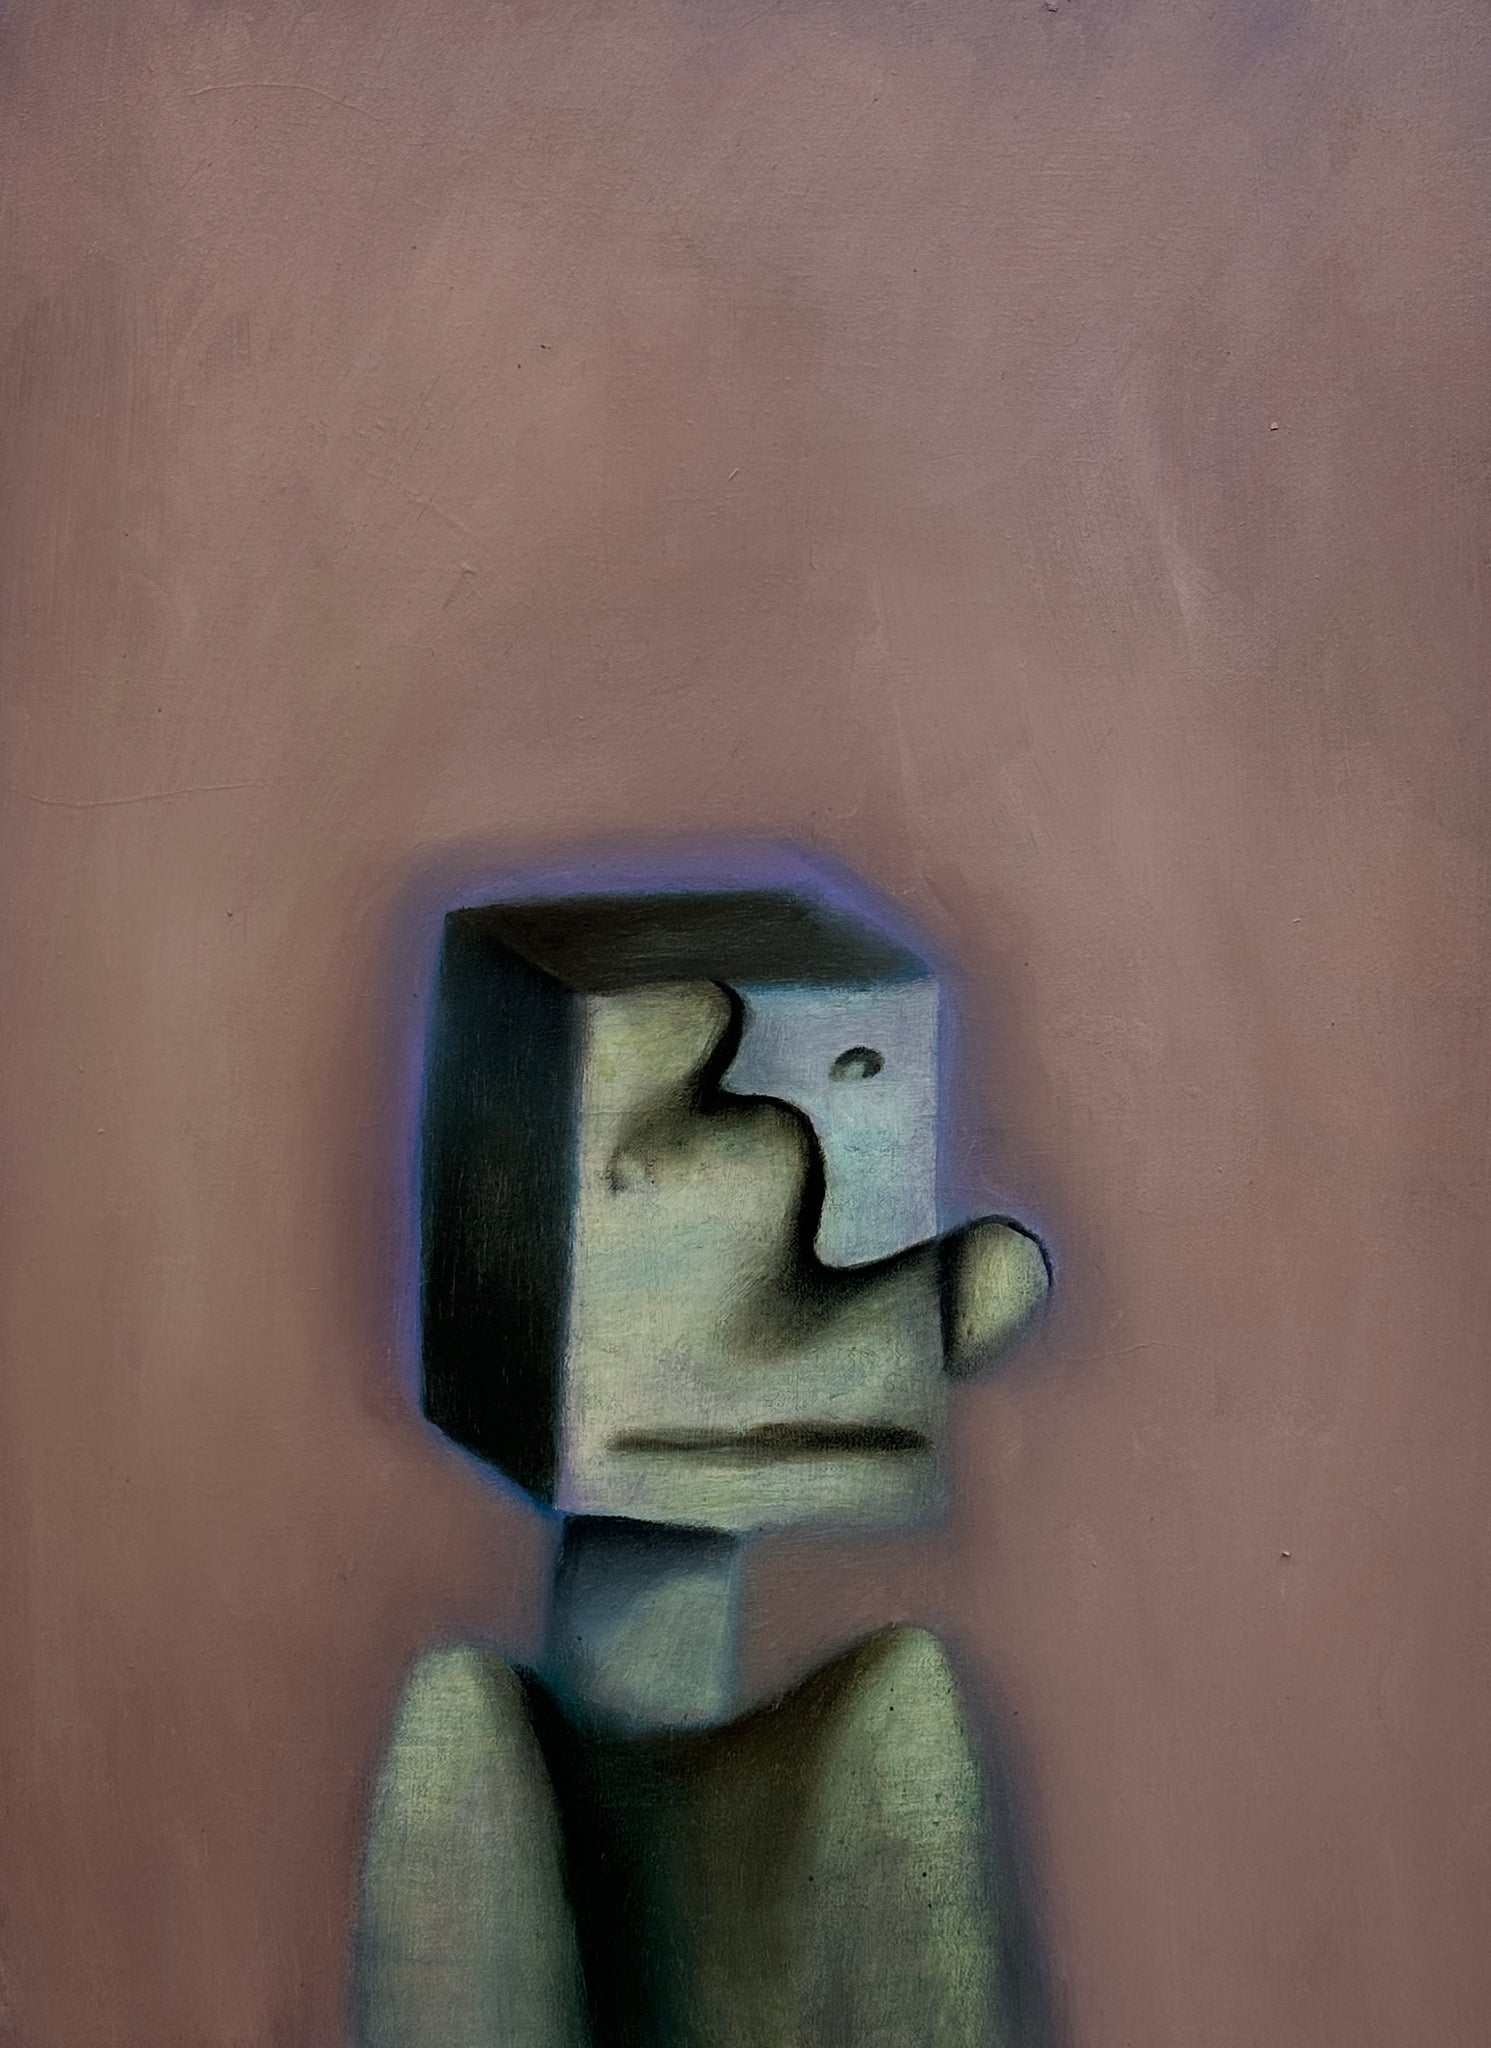 Todd Cramer, "Cubist"